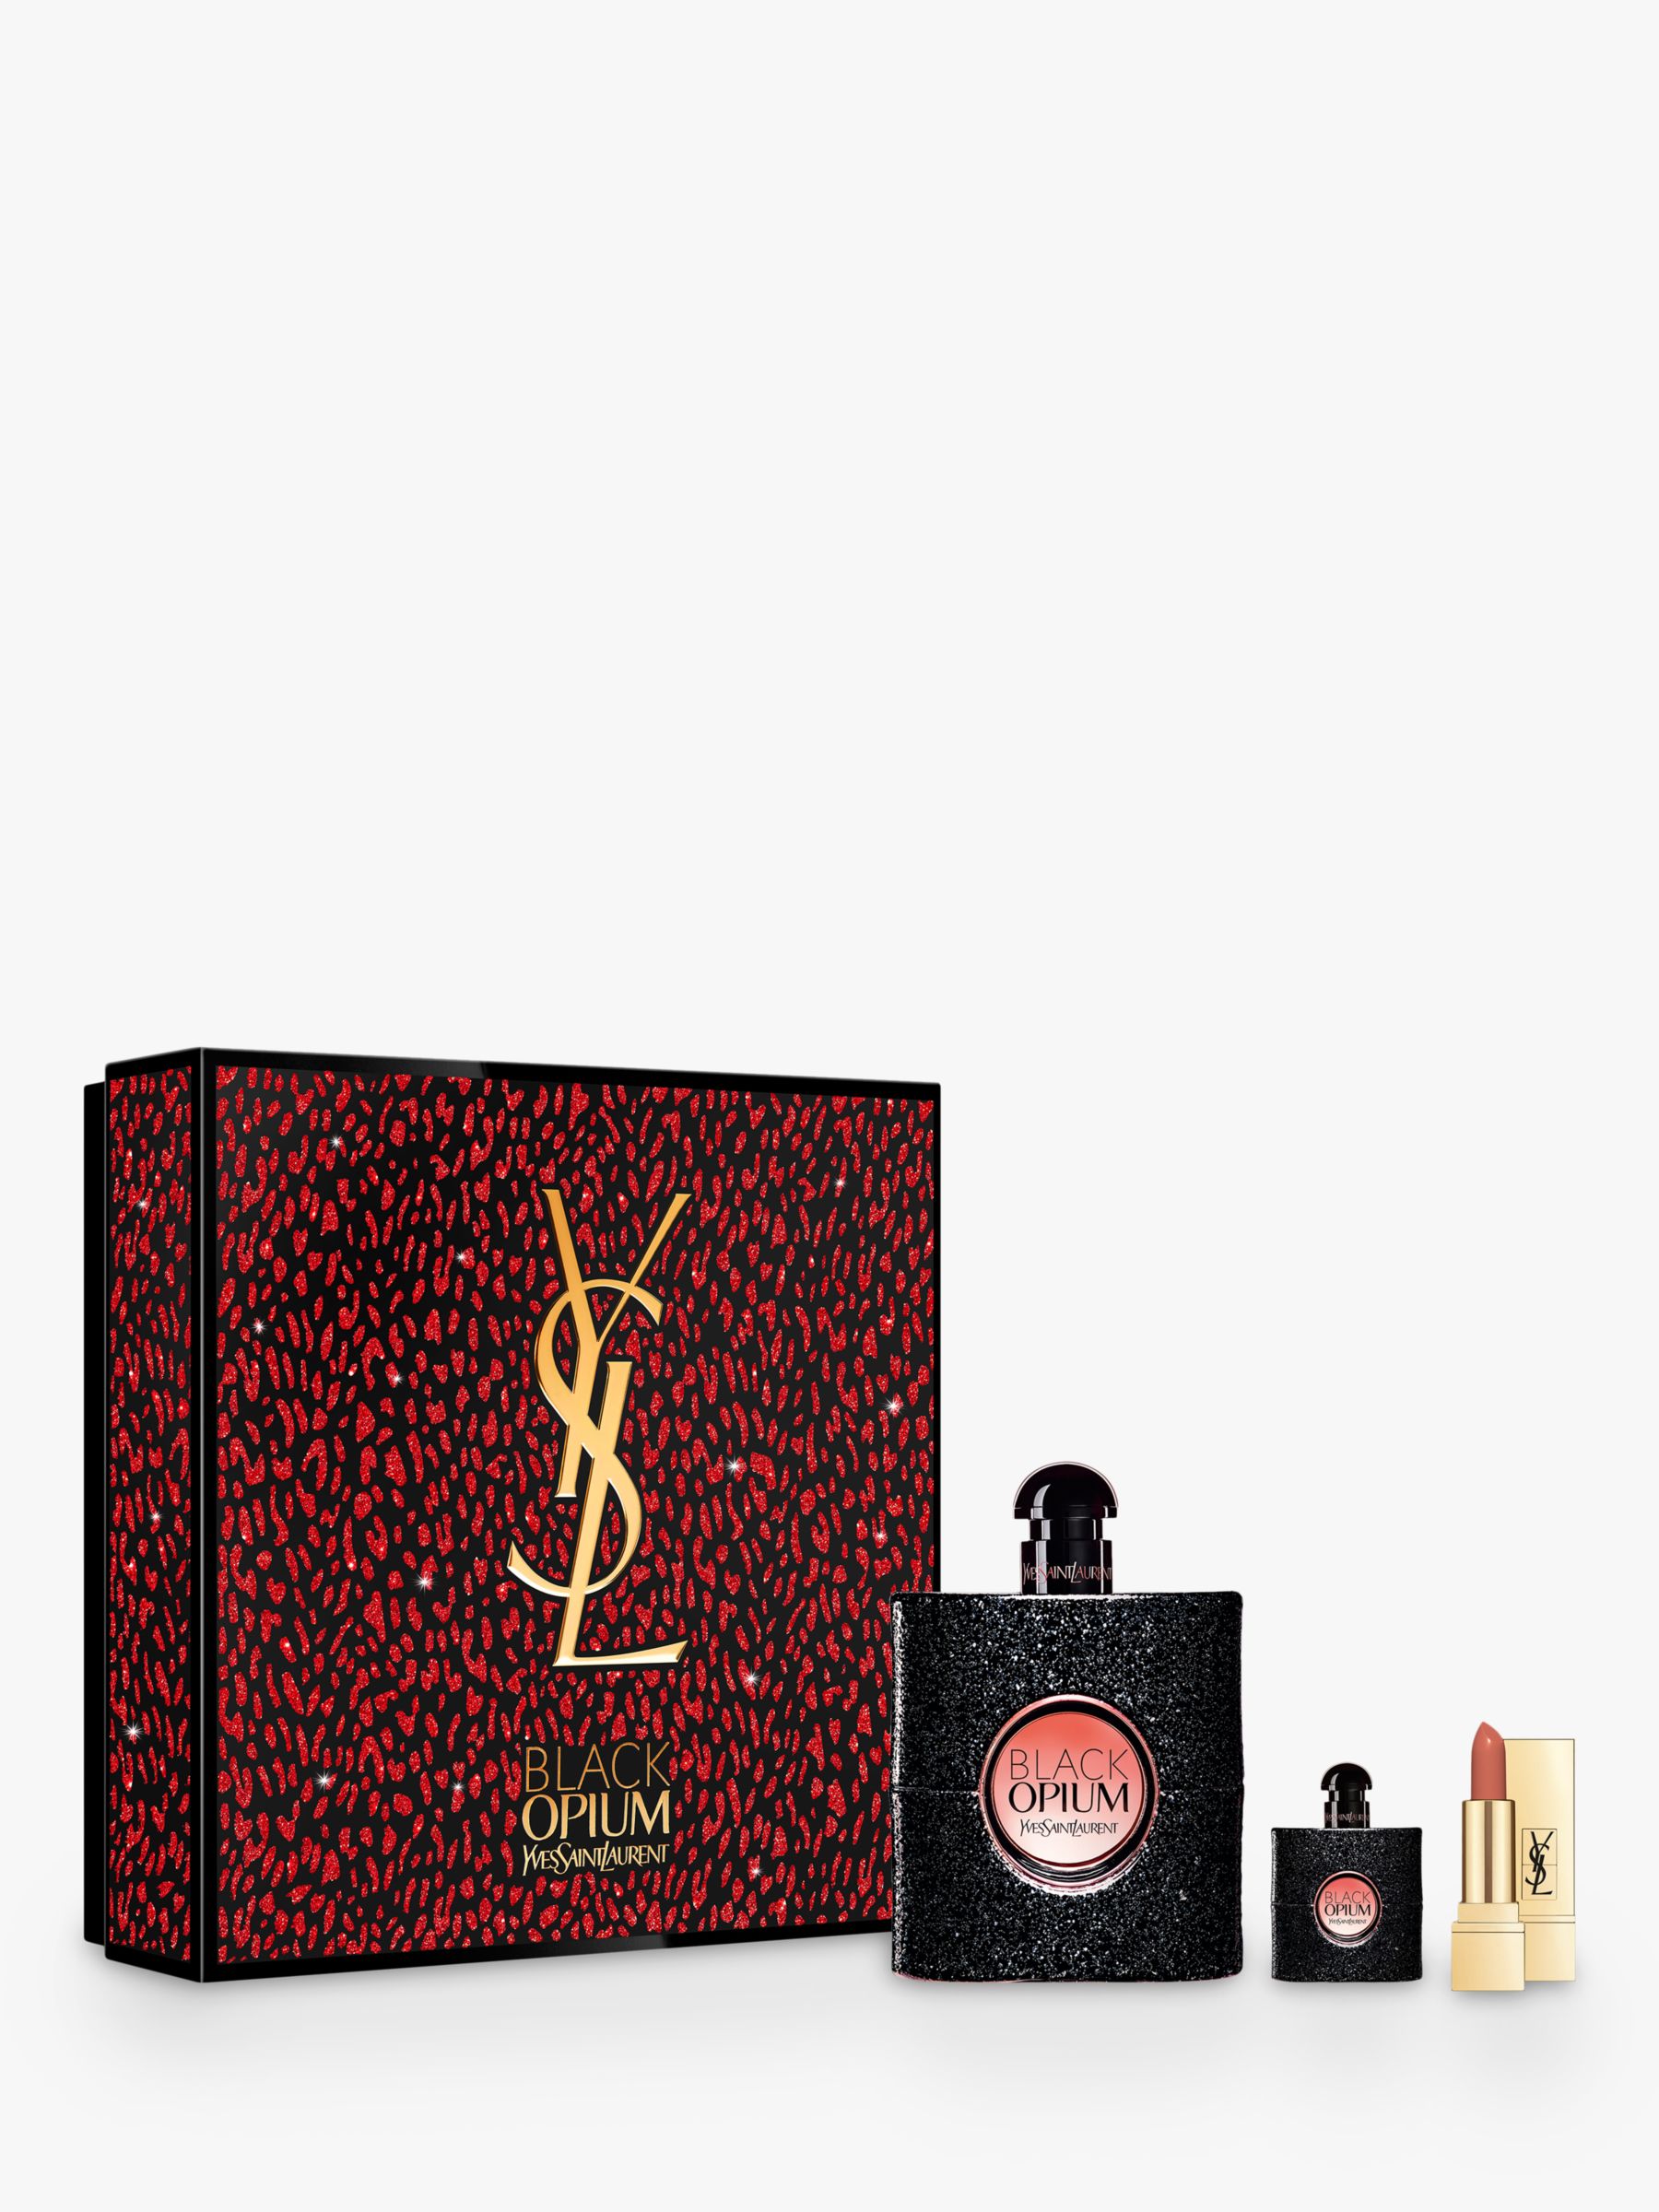 Imitatie Industrieel Verleiden Yves Saint Laurent Ultimate Black Opium Eau de Parfum 90ml and Rouge Pur  Couture Fragrance Gift Set